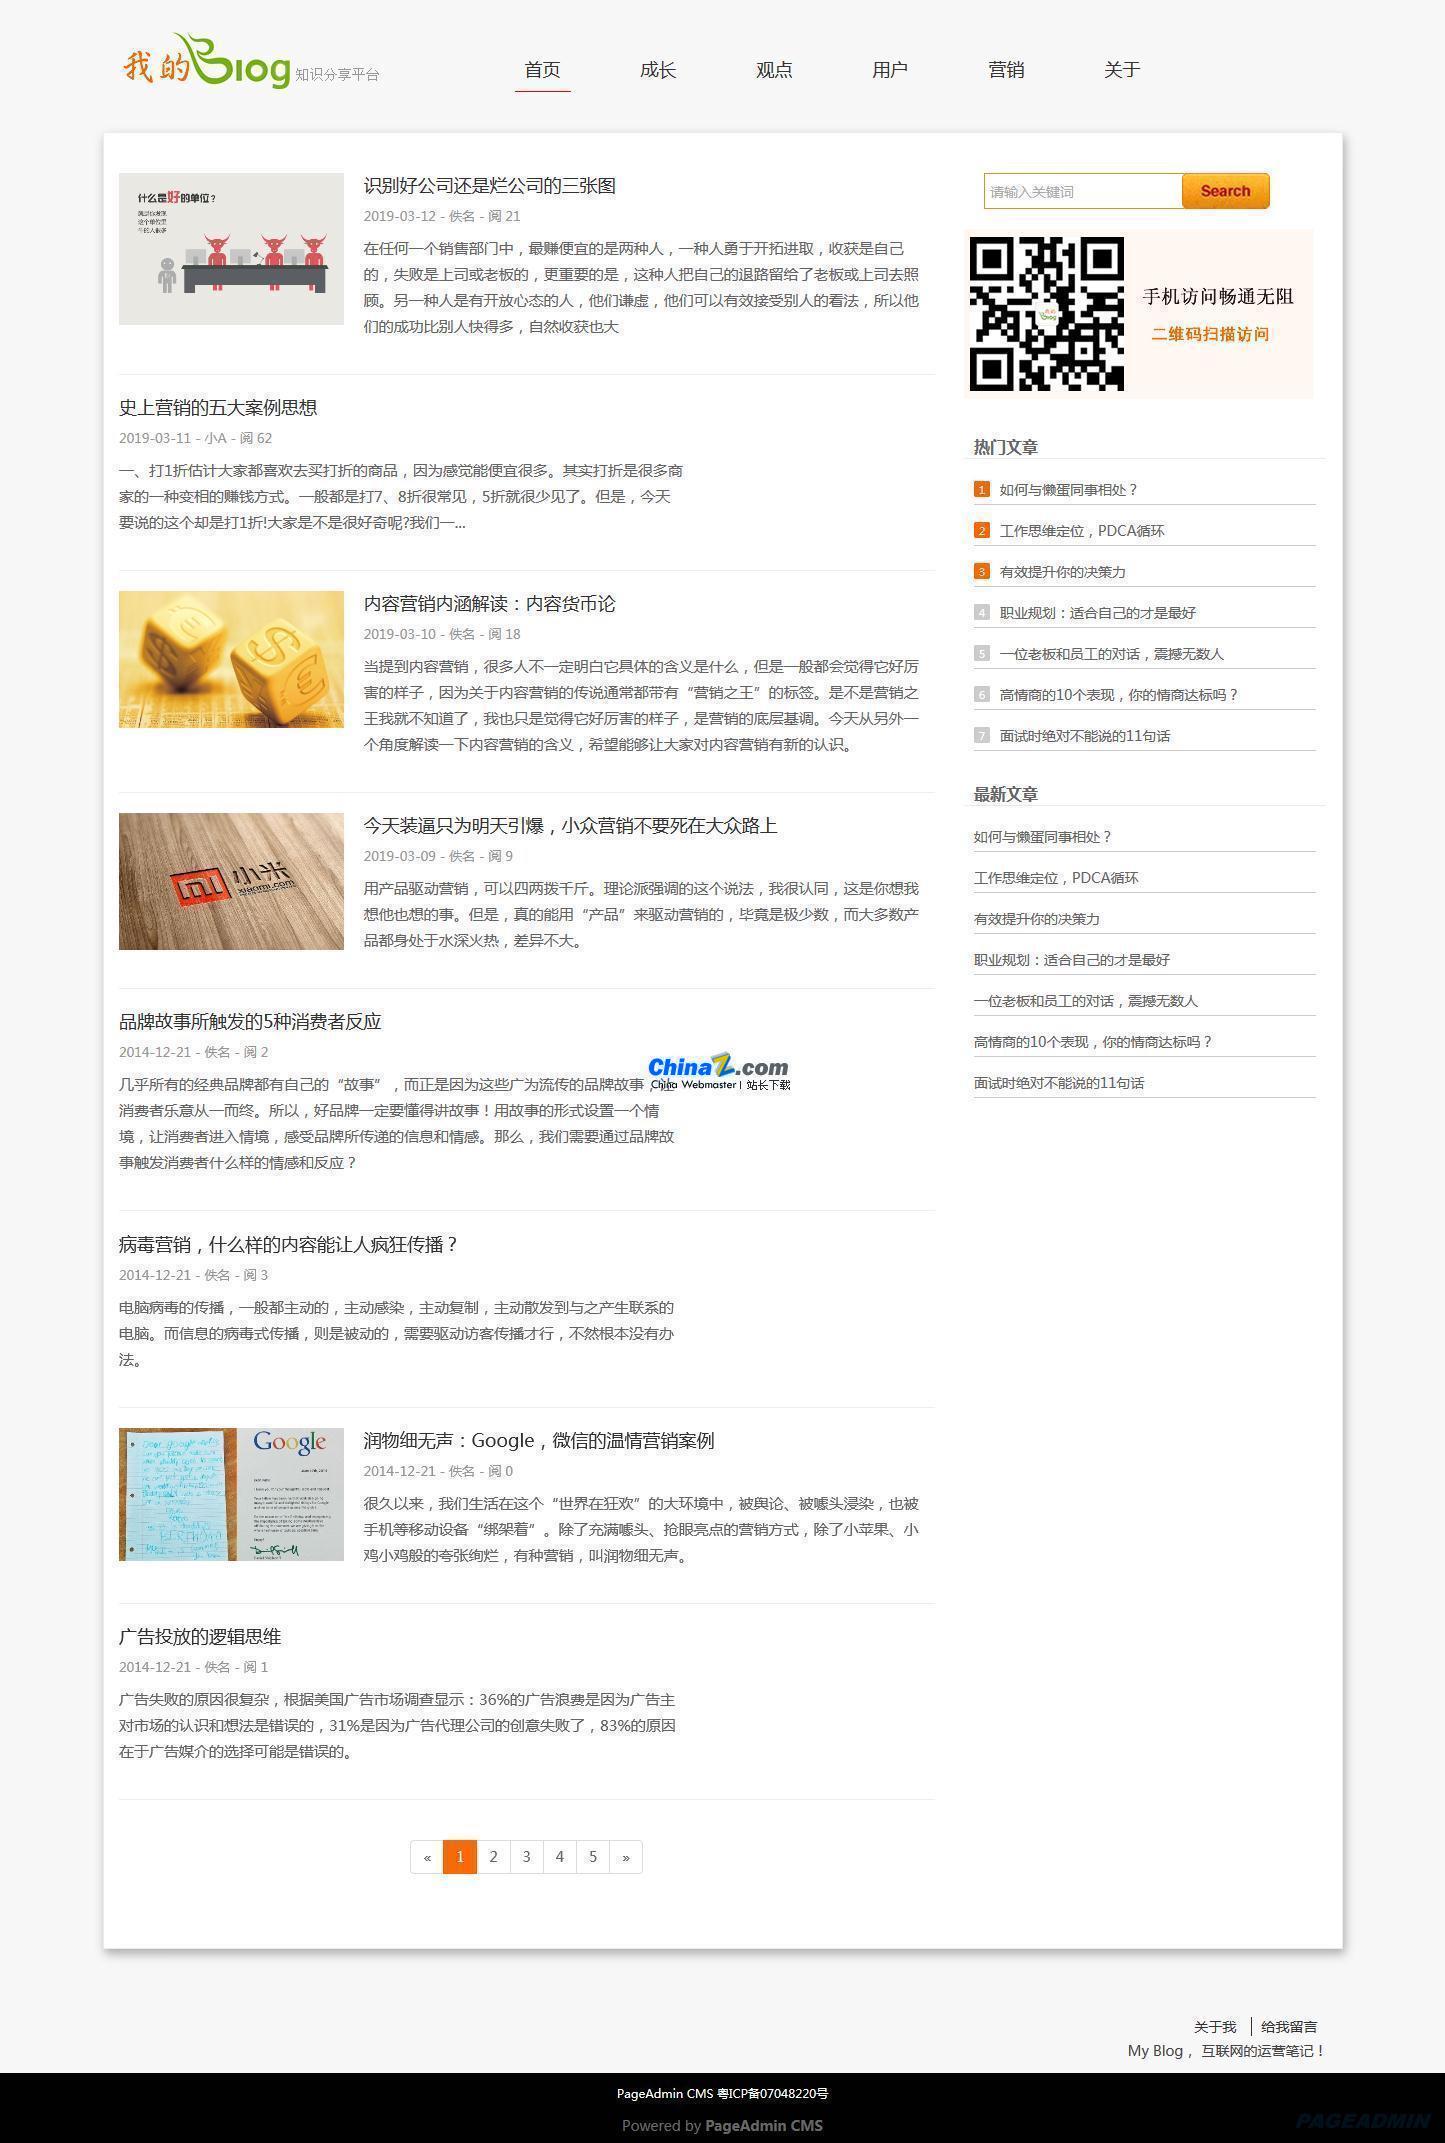 PageAdmin私家博客体系 v4.神仙道.14.1-零度空间